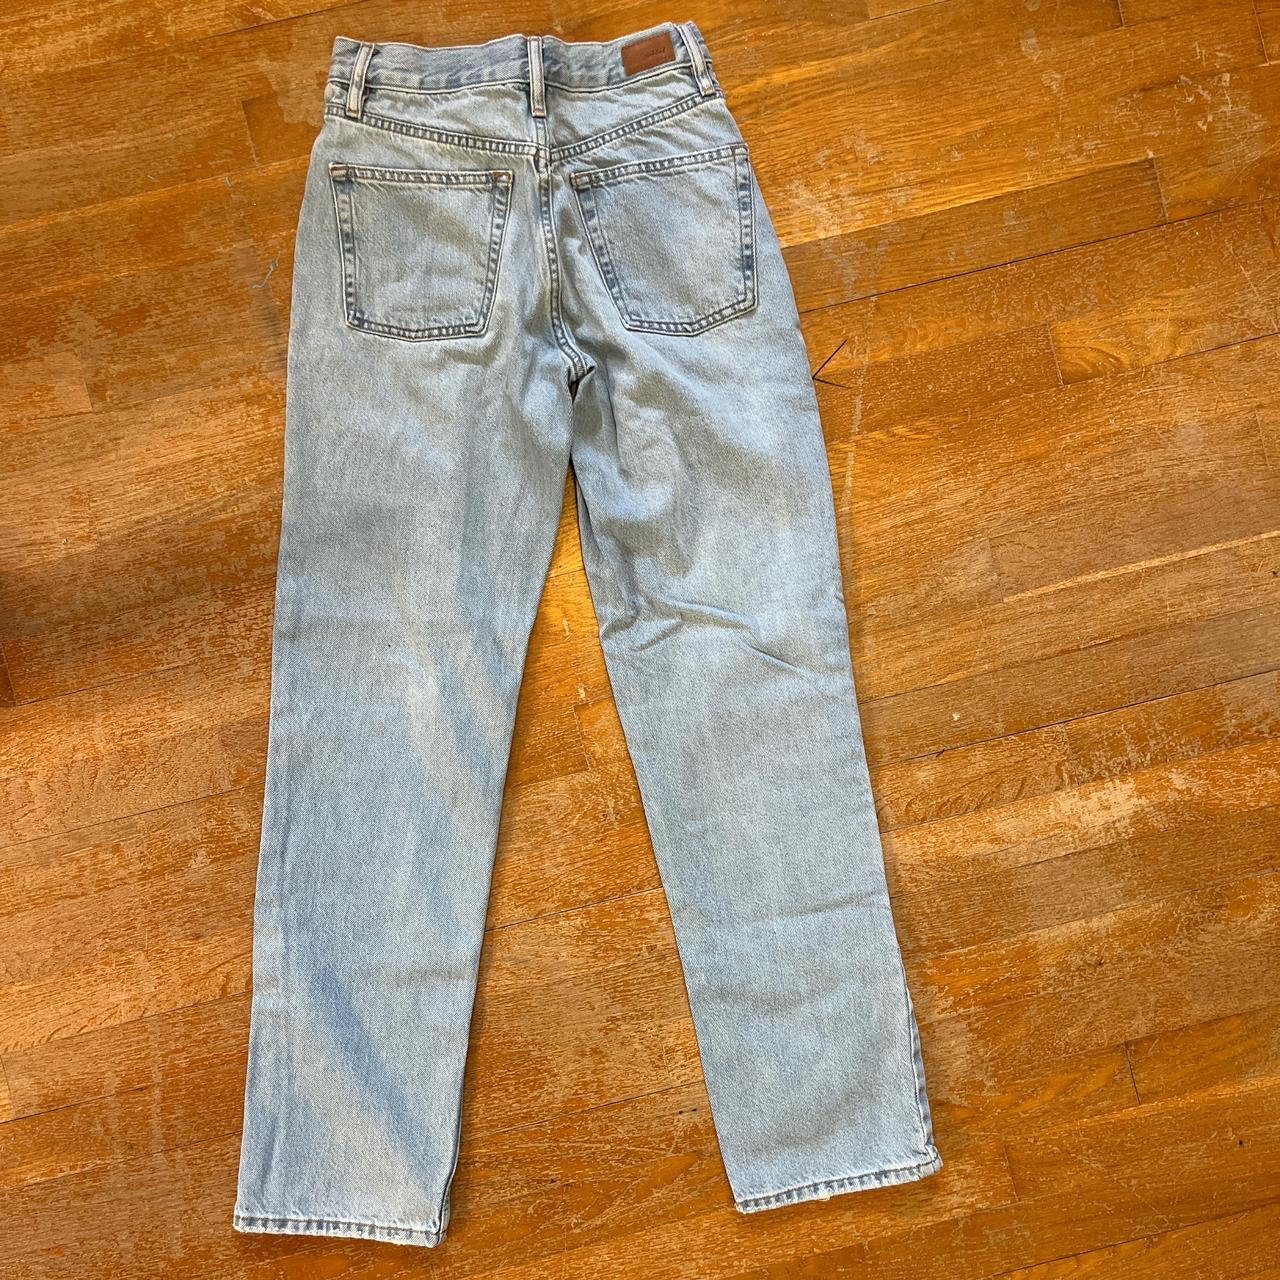 Subdued jeans size 26, #jeans #pants #straightleg